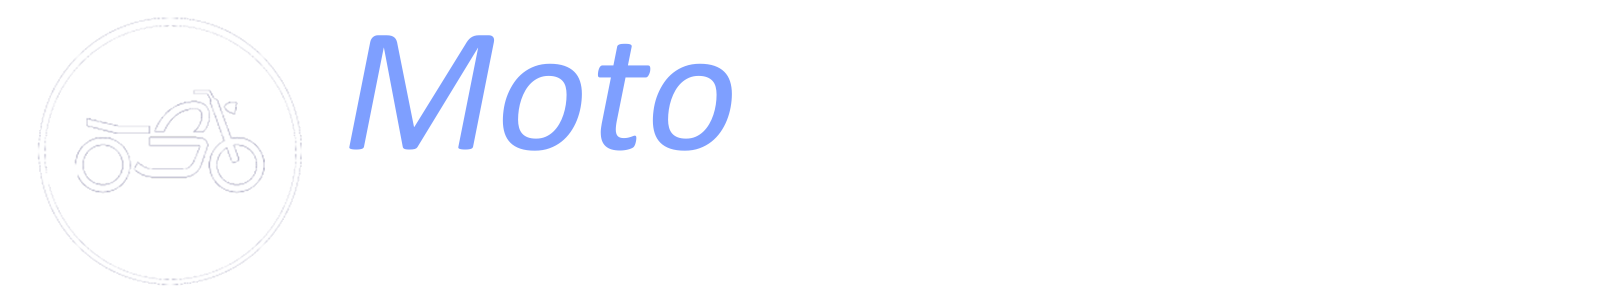 MotoBooking.pl